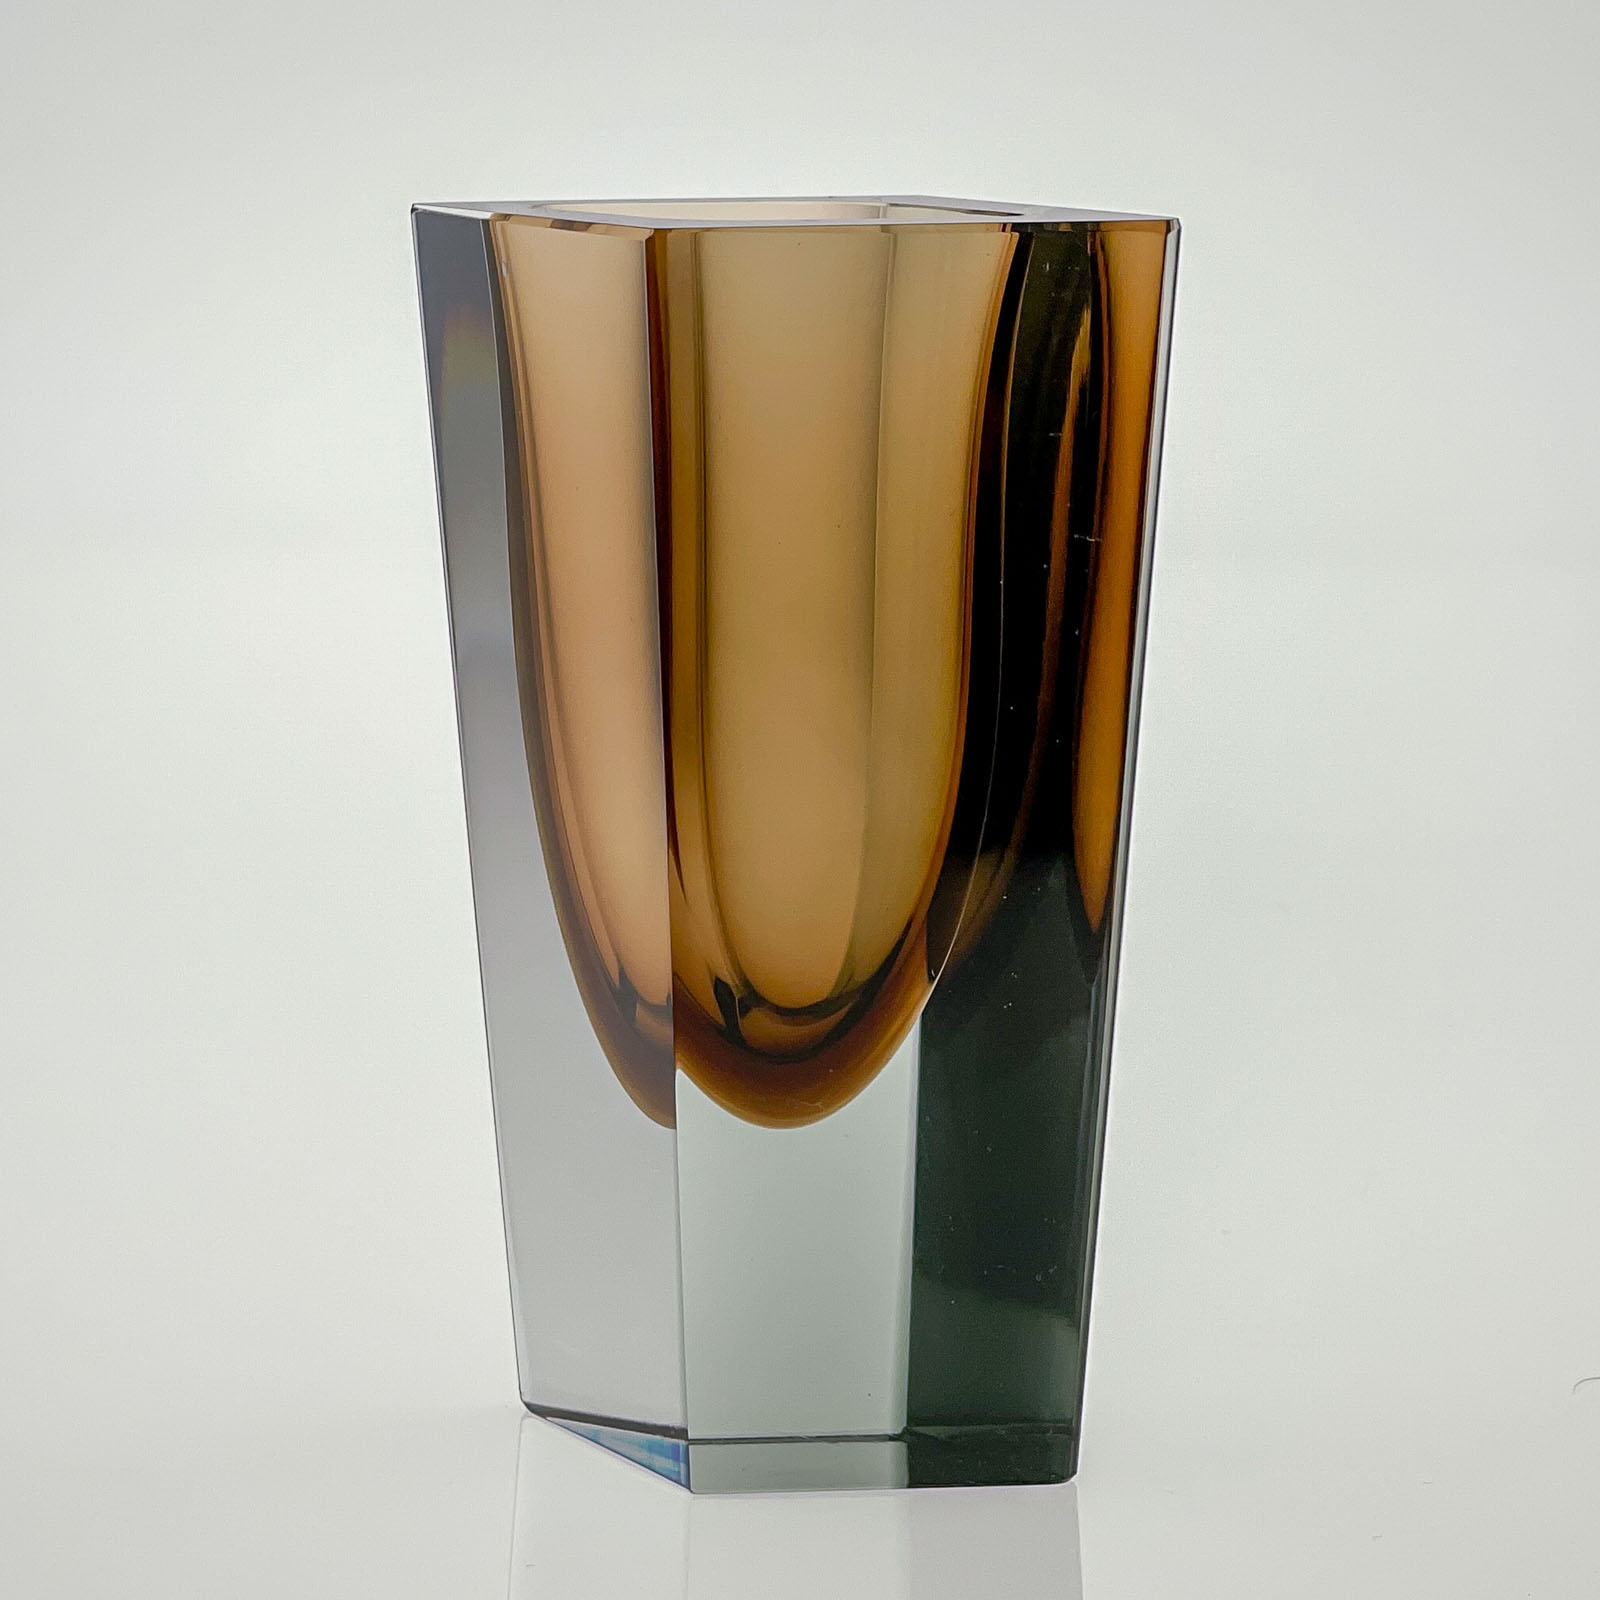 Kaj Franck - A glass Art-object "Prisma", model KF 215 in brown and grey hues - Nuutajärvi-Notsjö Finland circa 1965